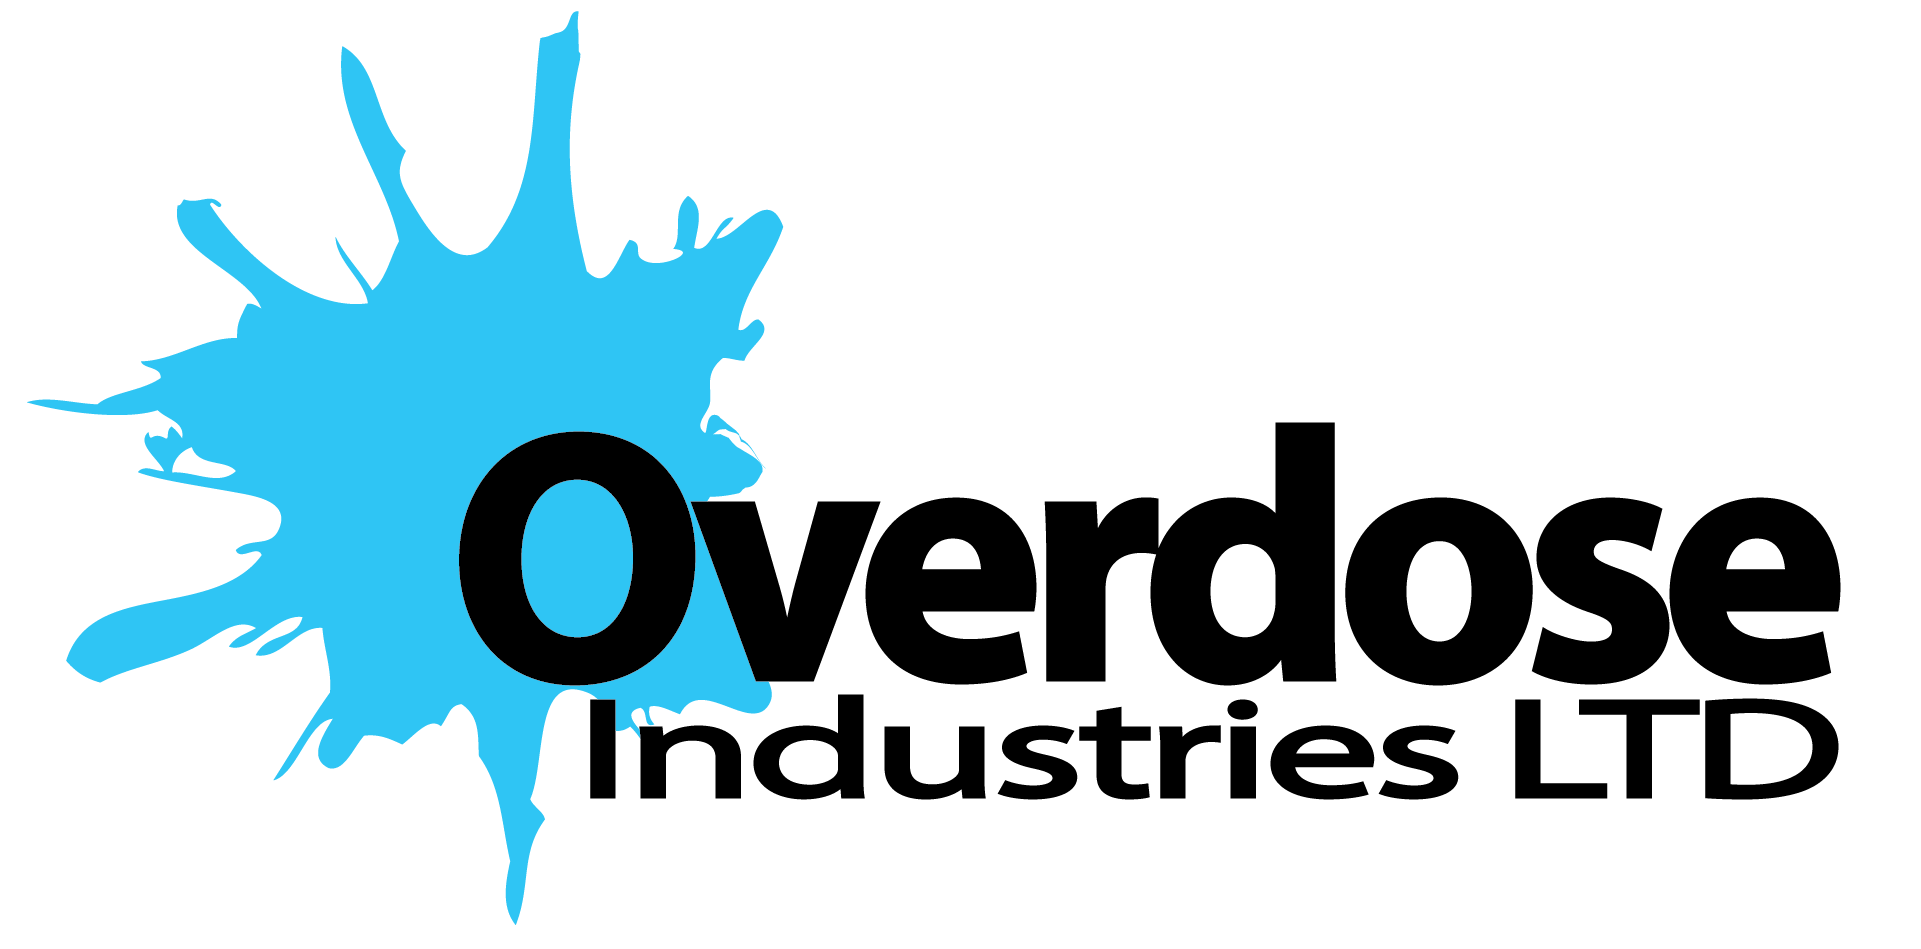 Overdose industries logo